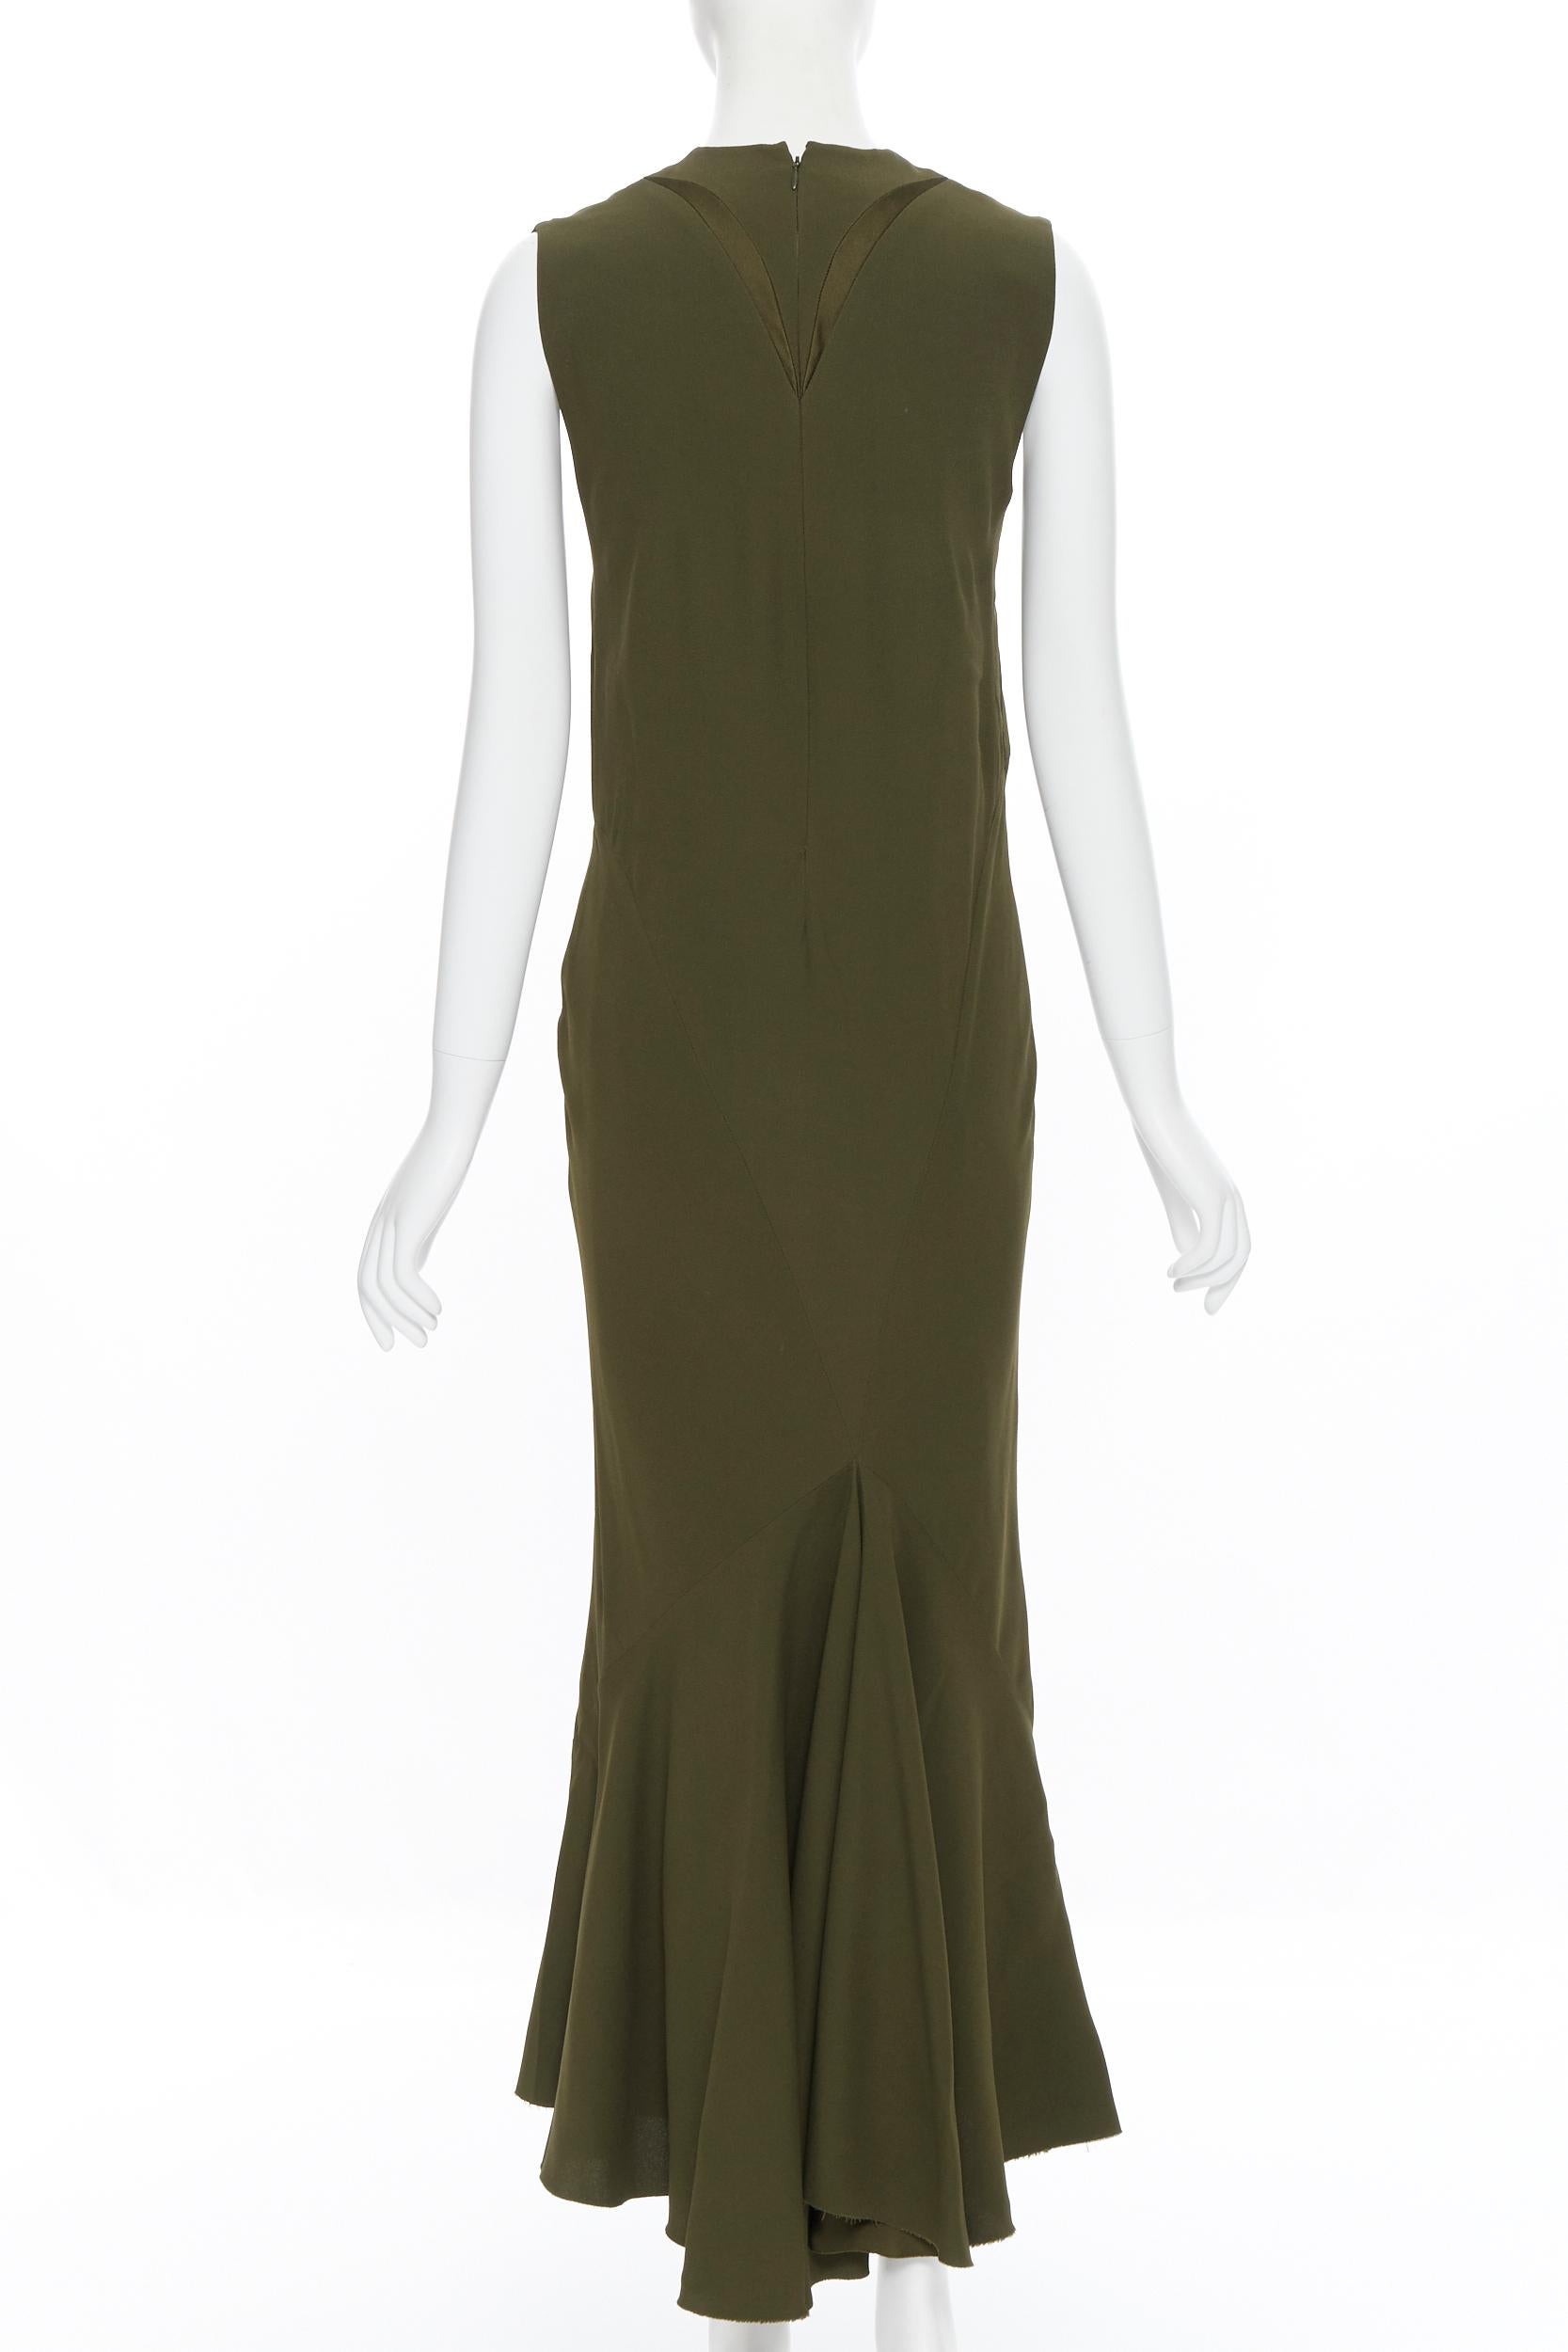 Women's HAIDER ACKERMANN khaki green curved seam insert bias cut dress FR36 XS